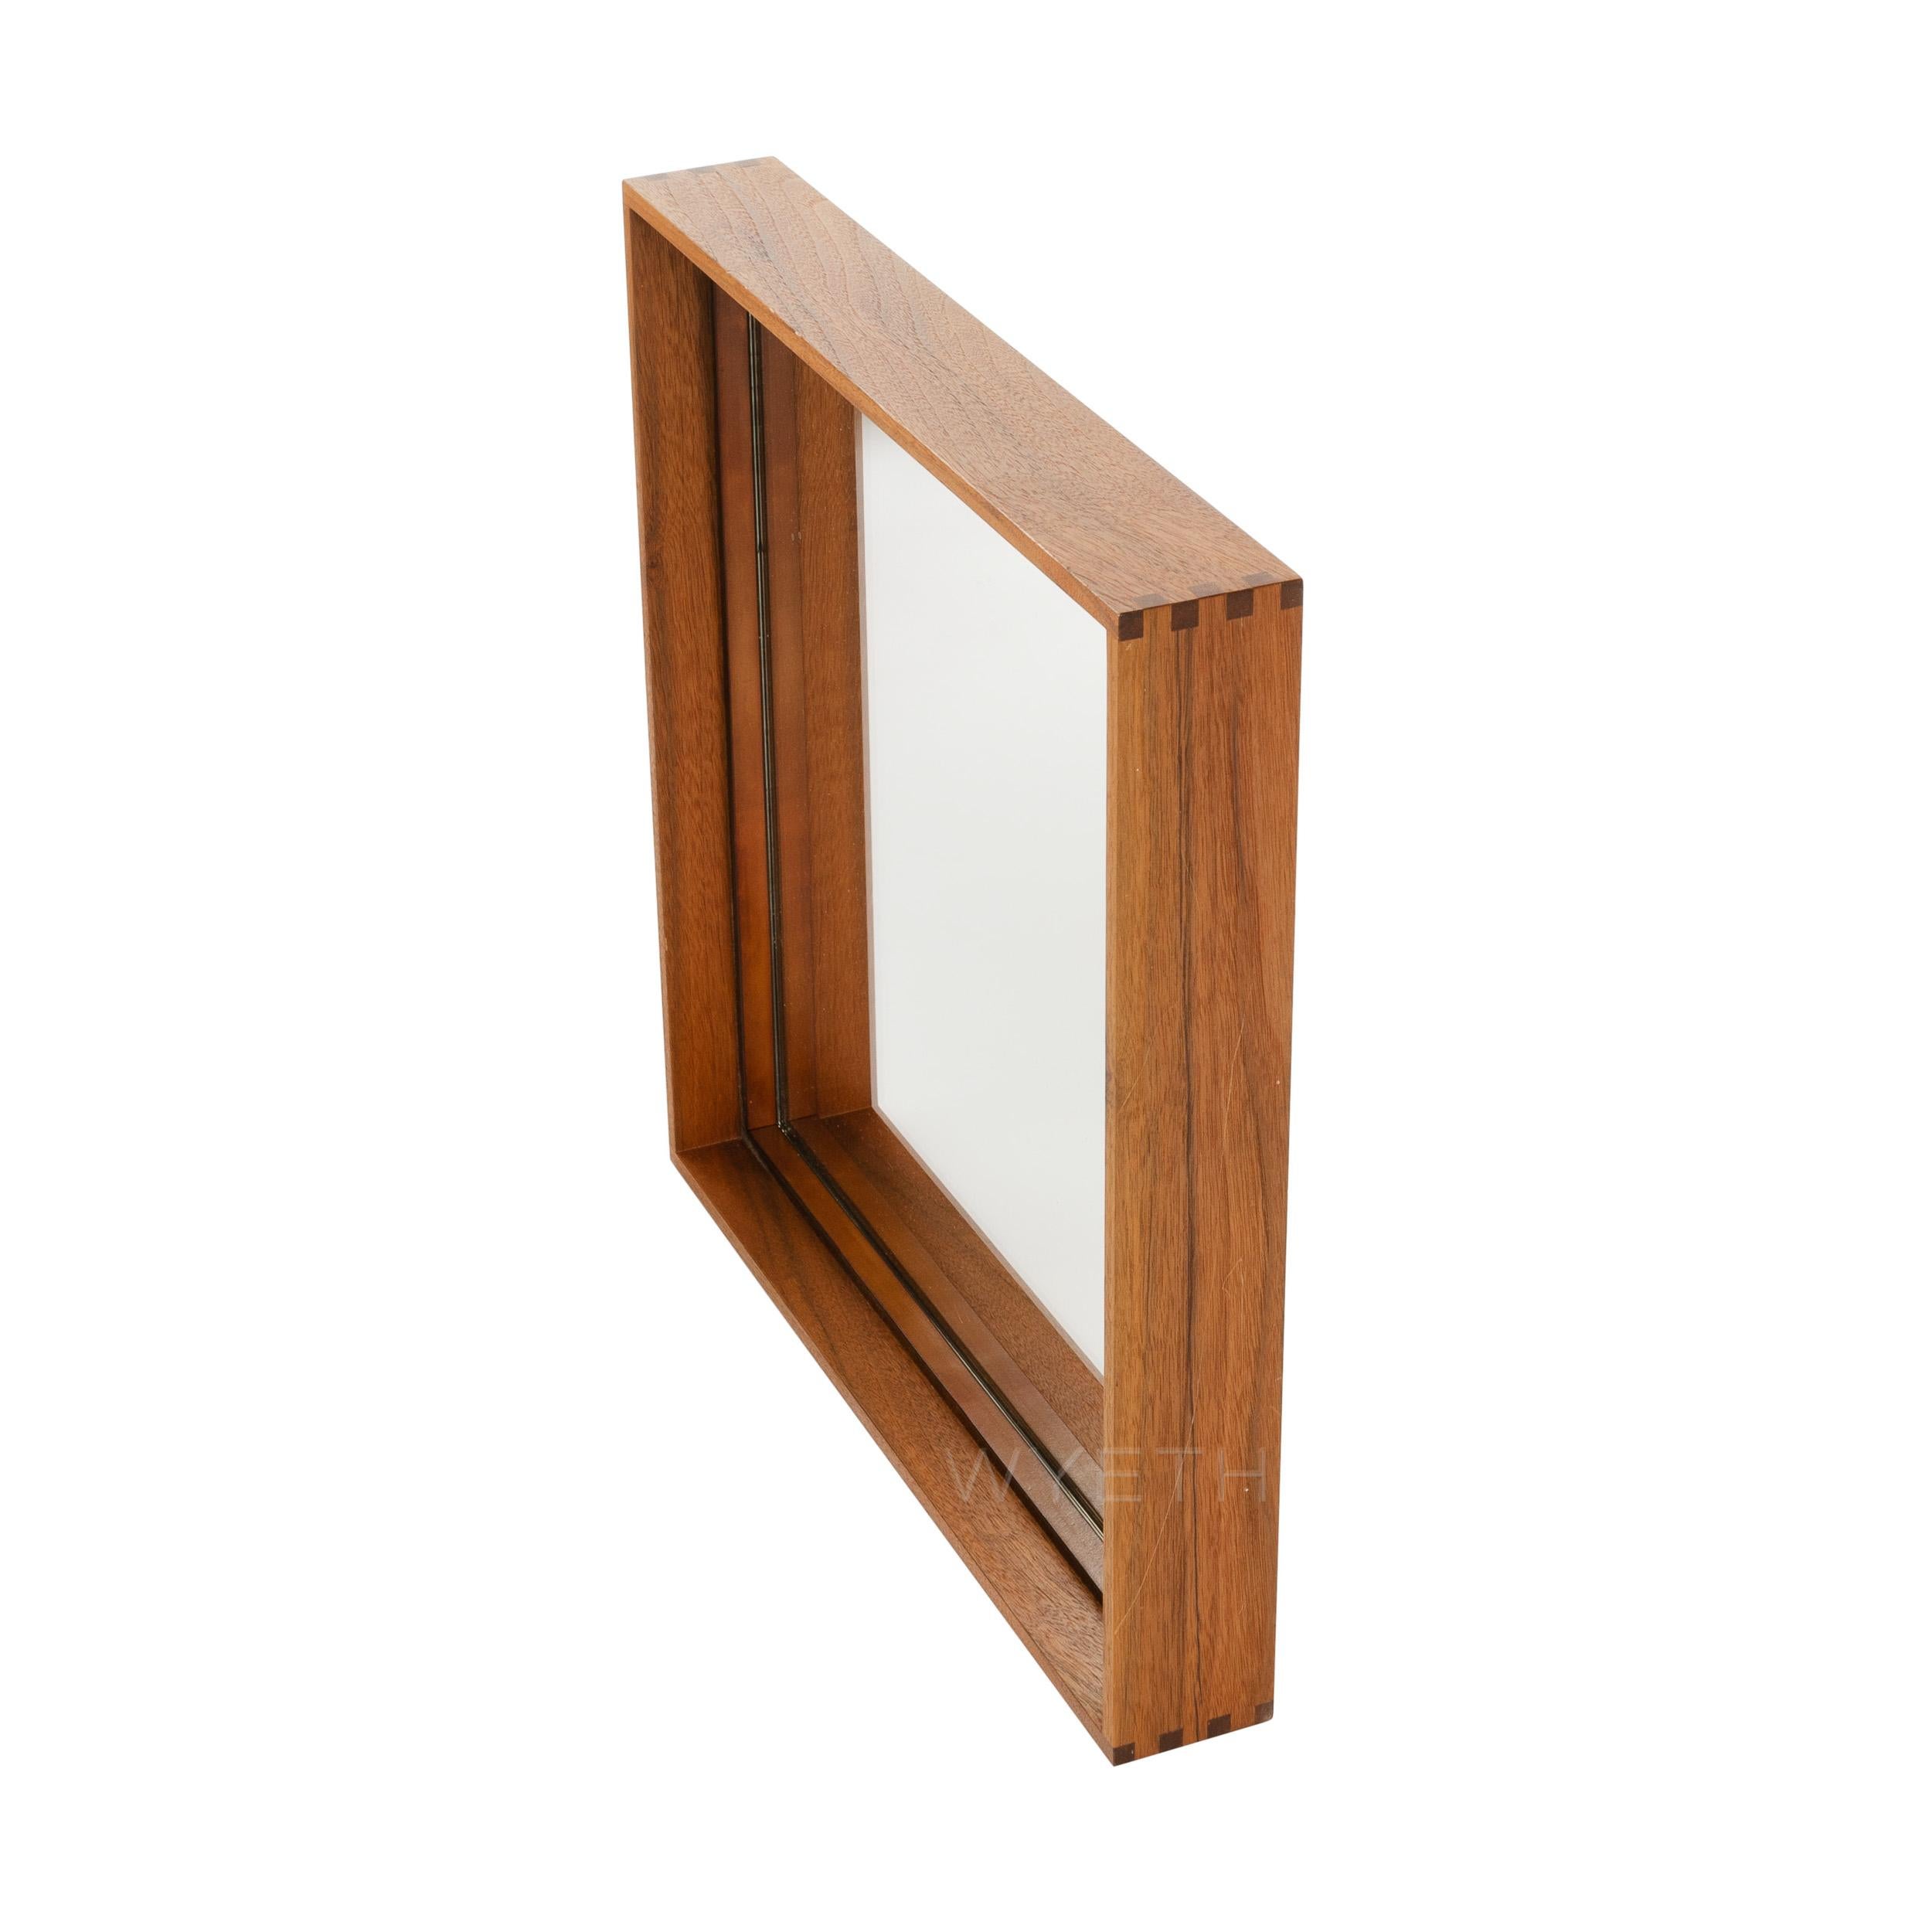 A Wyeth original, thin edge wood mirror with box cut corners in walnut. Available in custom sizes.